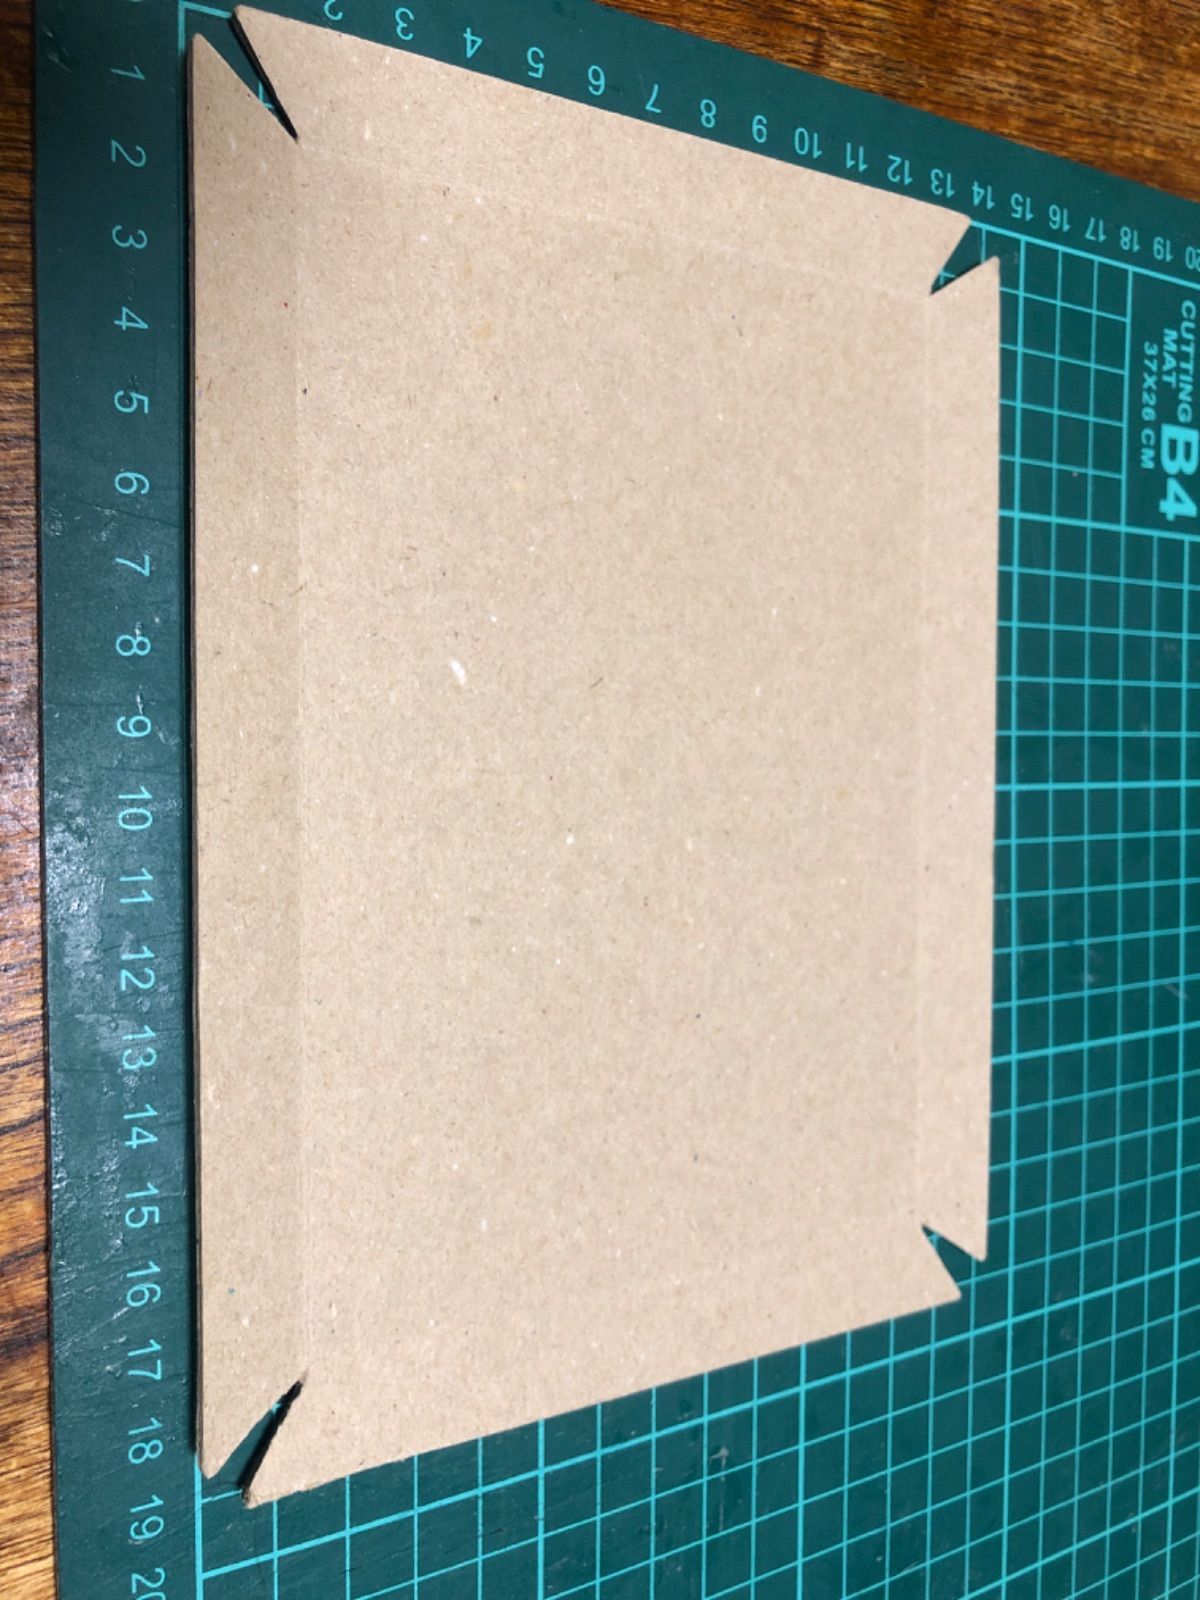 How To Make A Cardboard DIY Photo Frame